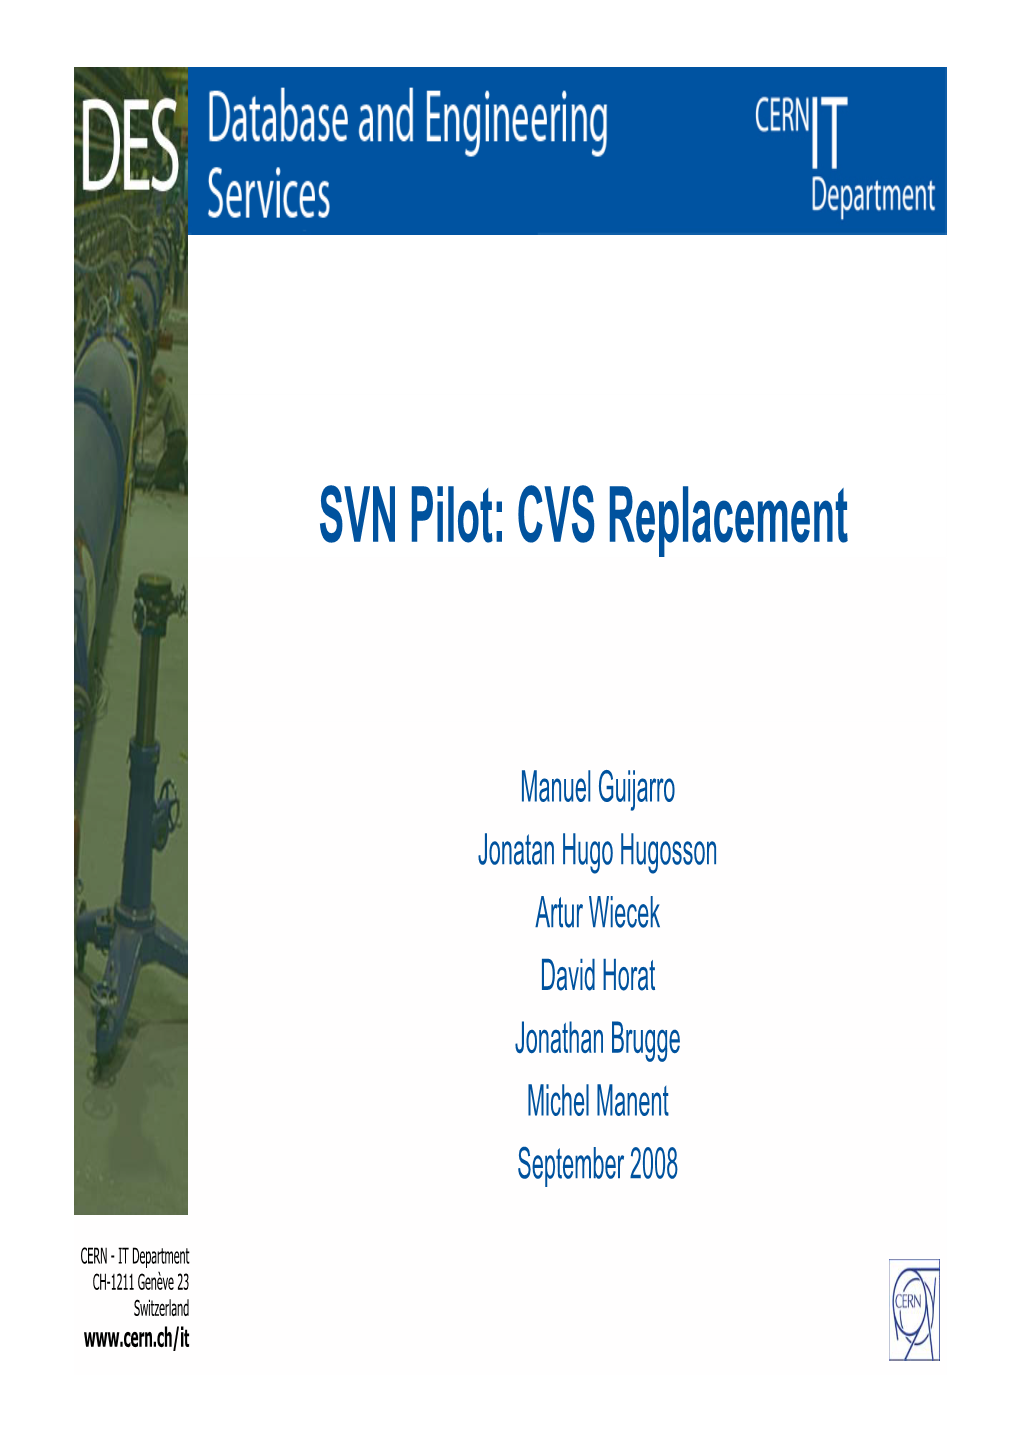 SVN Pilot: CVS Replacement